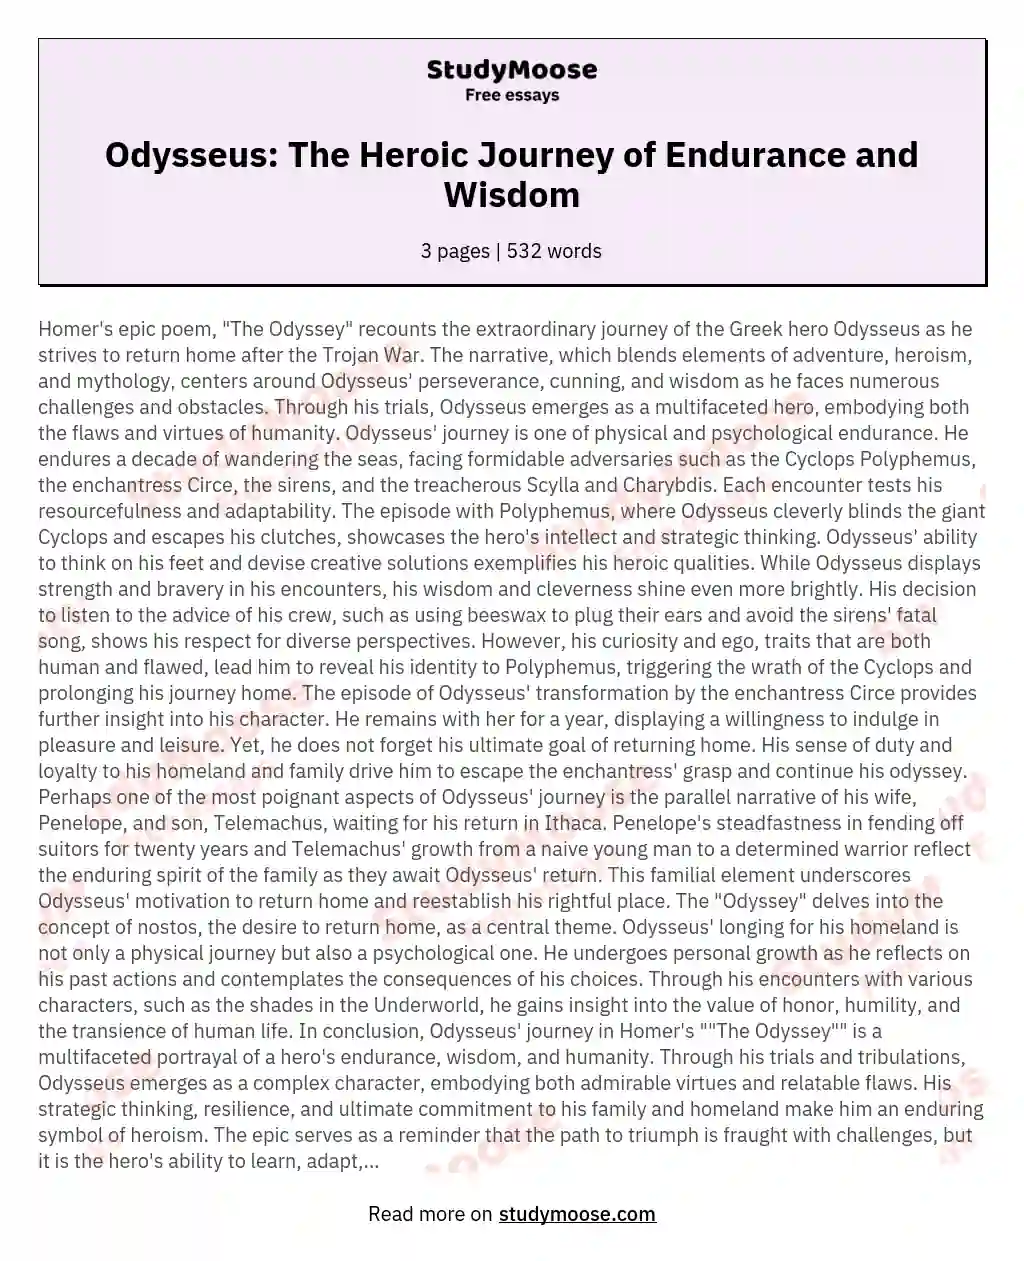 Odysseus: The Heroic Journey of Endurance and Wisdom essay